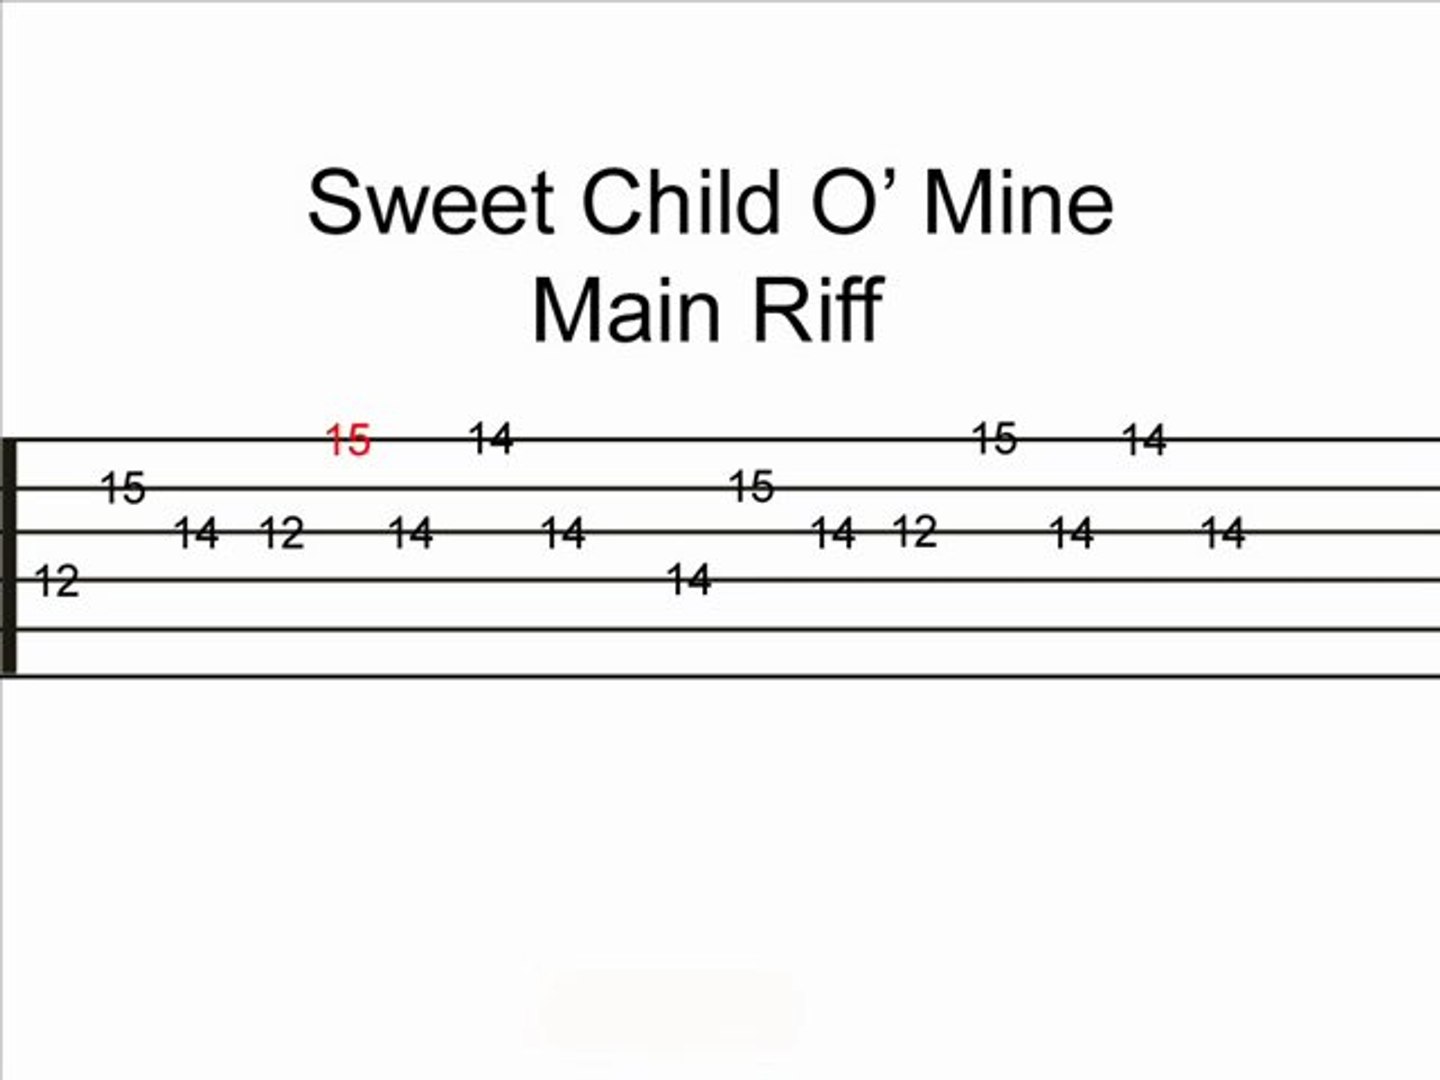 Sweet Child O Mine吉他谱 - 硬摇滚乐队枪炮与玫瑰乐队（Guns N’ Roses） - 电吉他谱 - 琴谱网